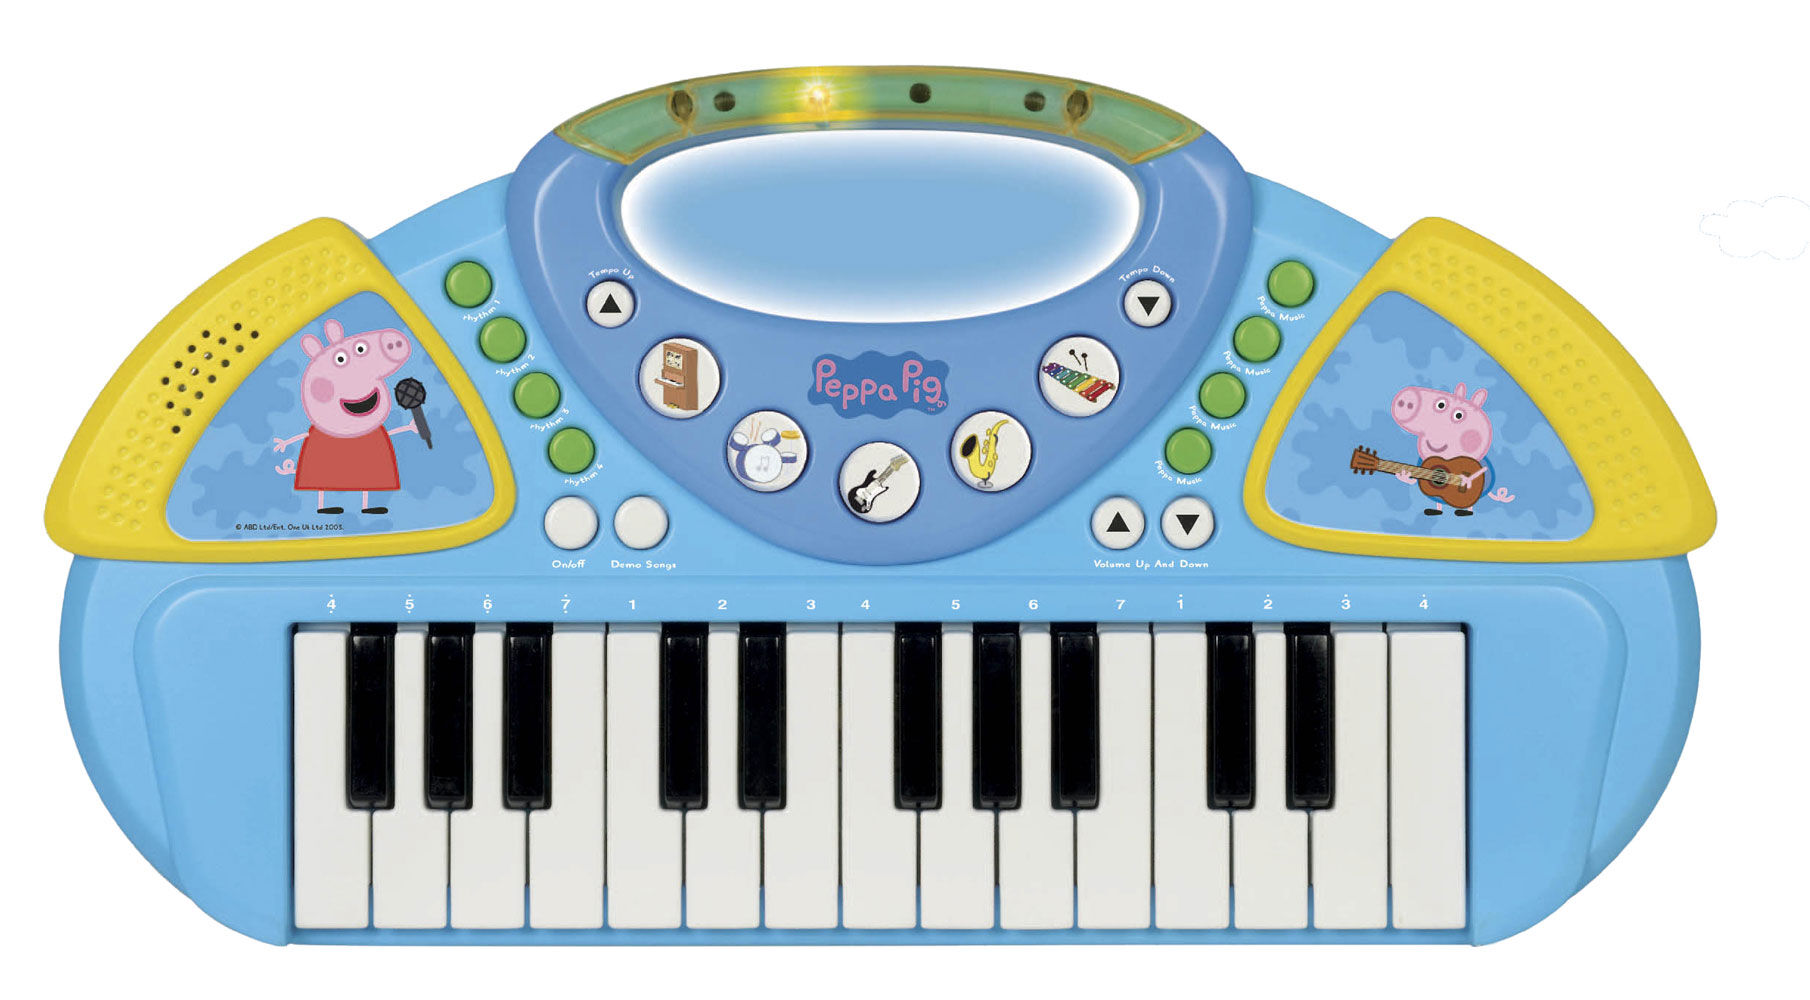 Peppa Pig 25 Key Keyboard | Toys R Us 